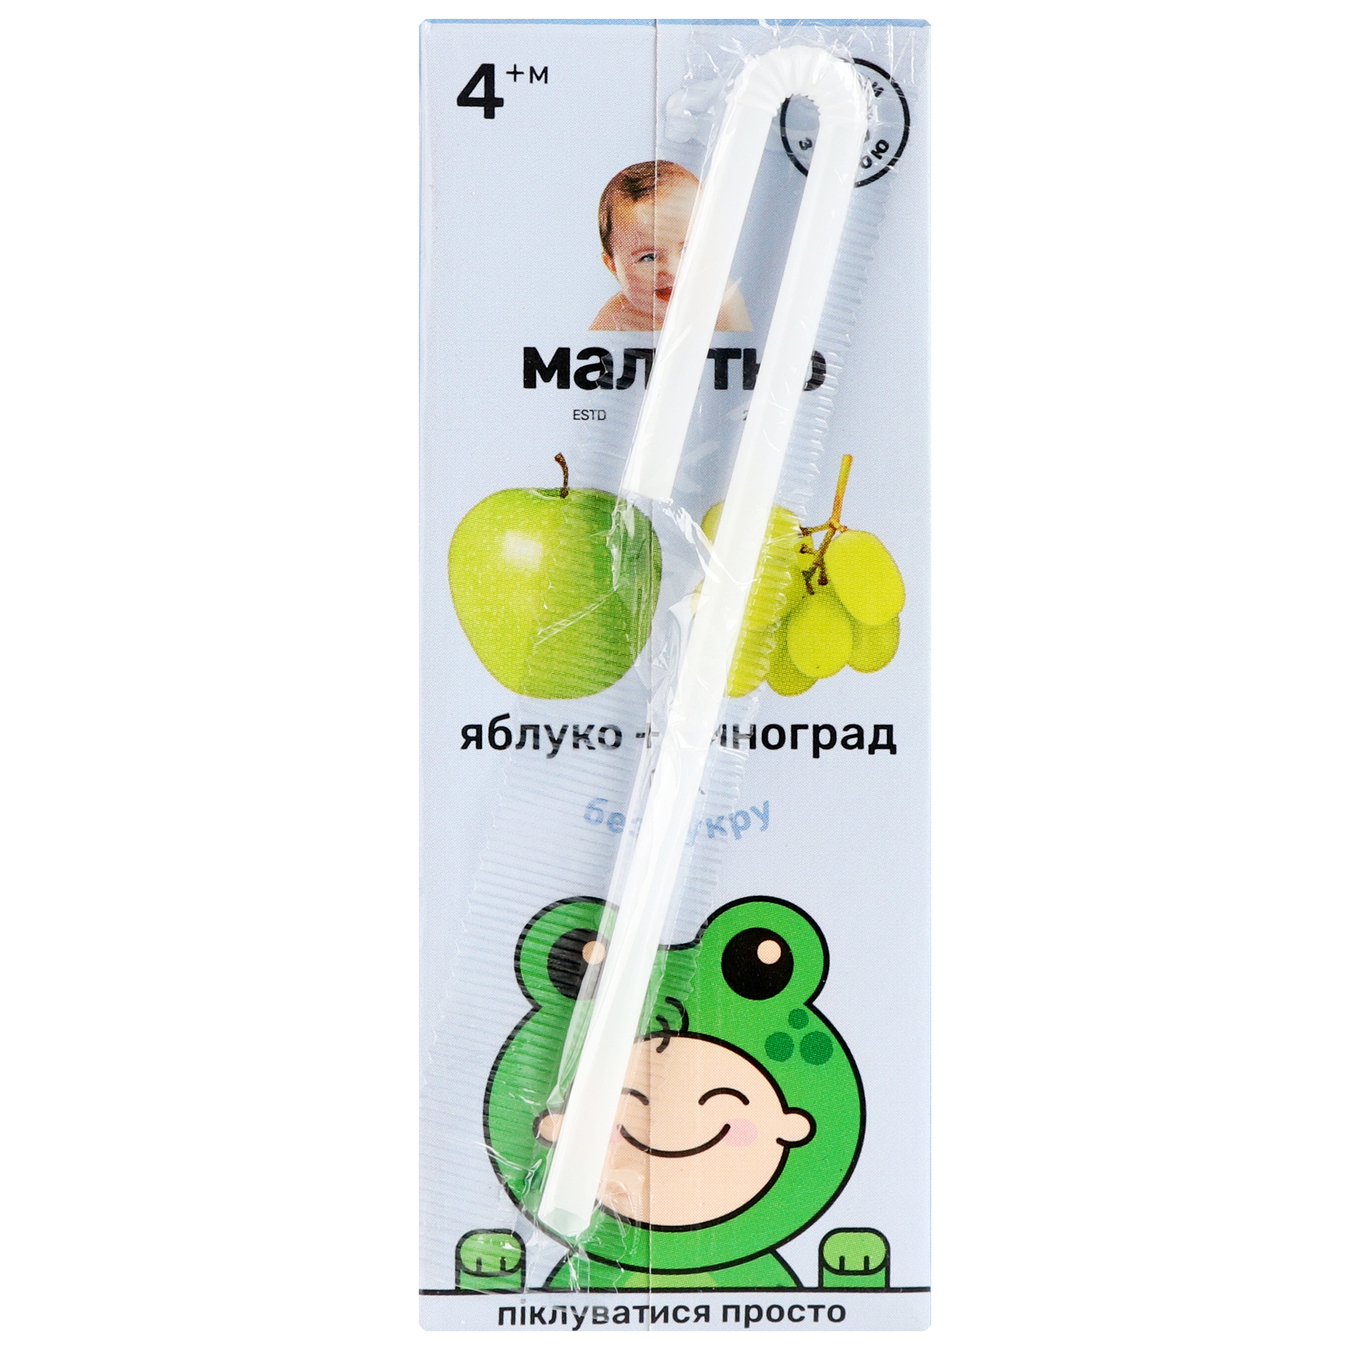 Malytko apple-grape juice 175ml 3